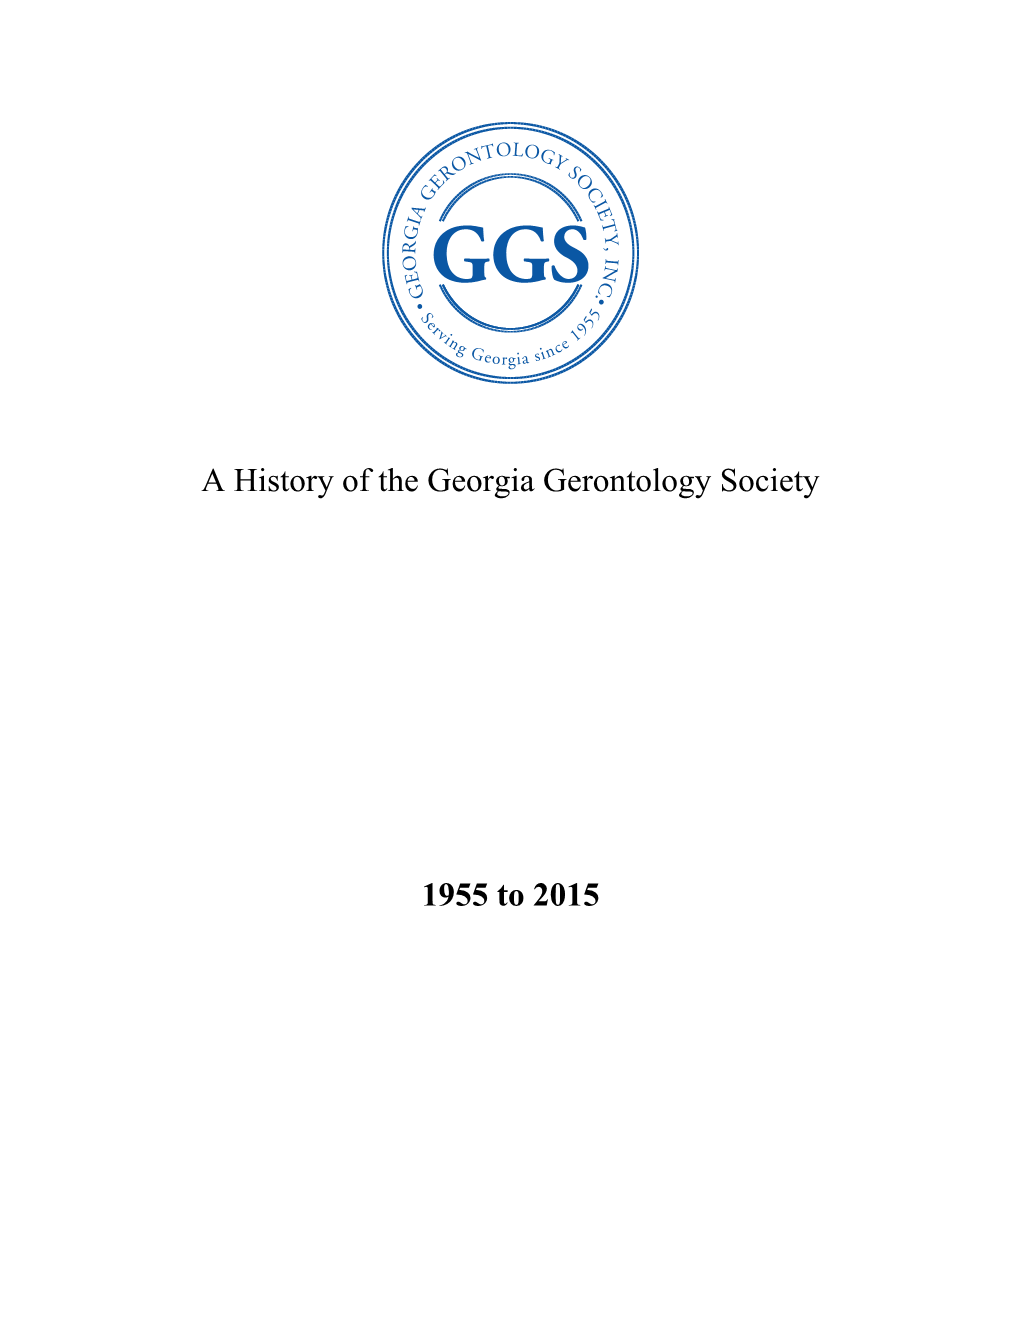 History of GGS 1955-2015